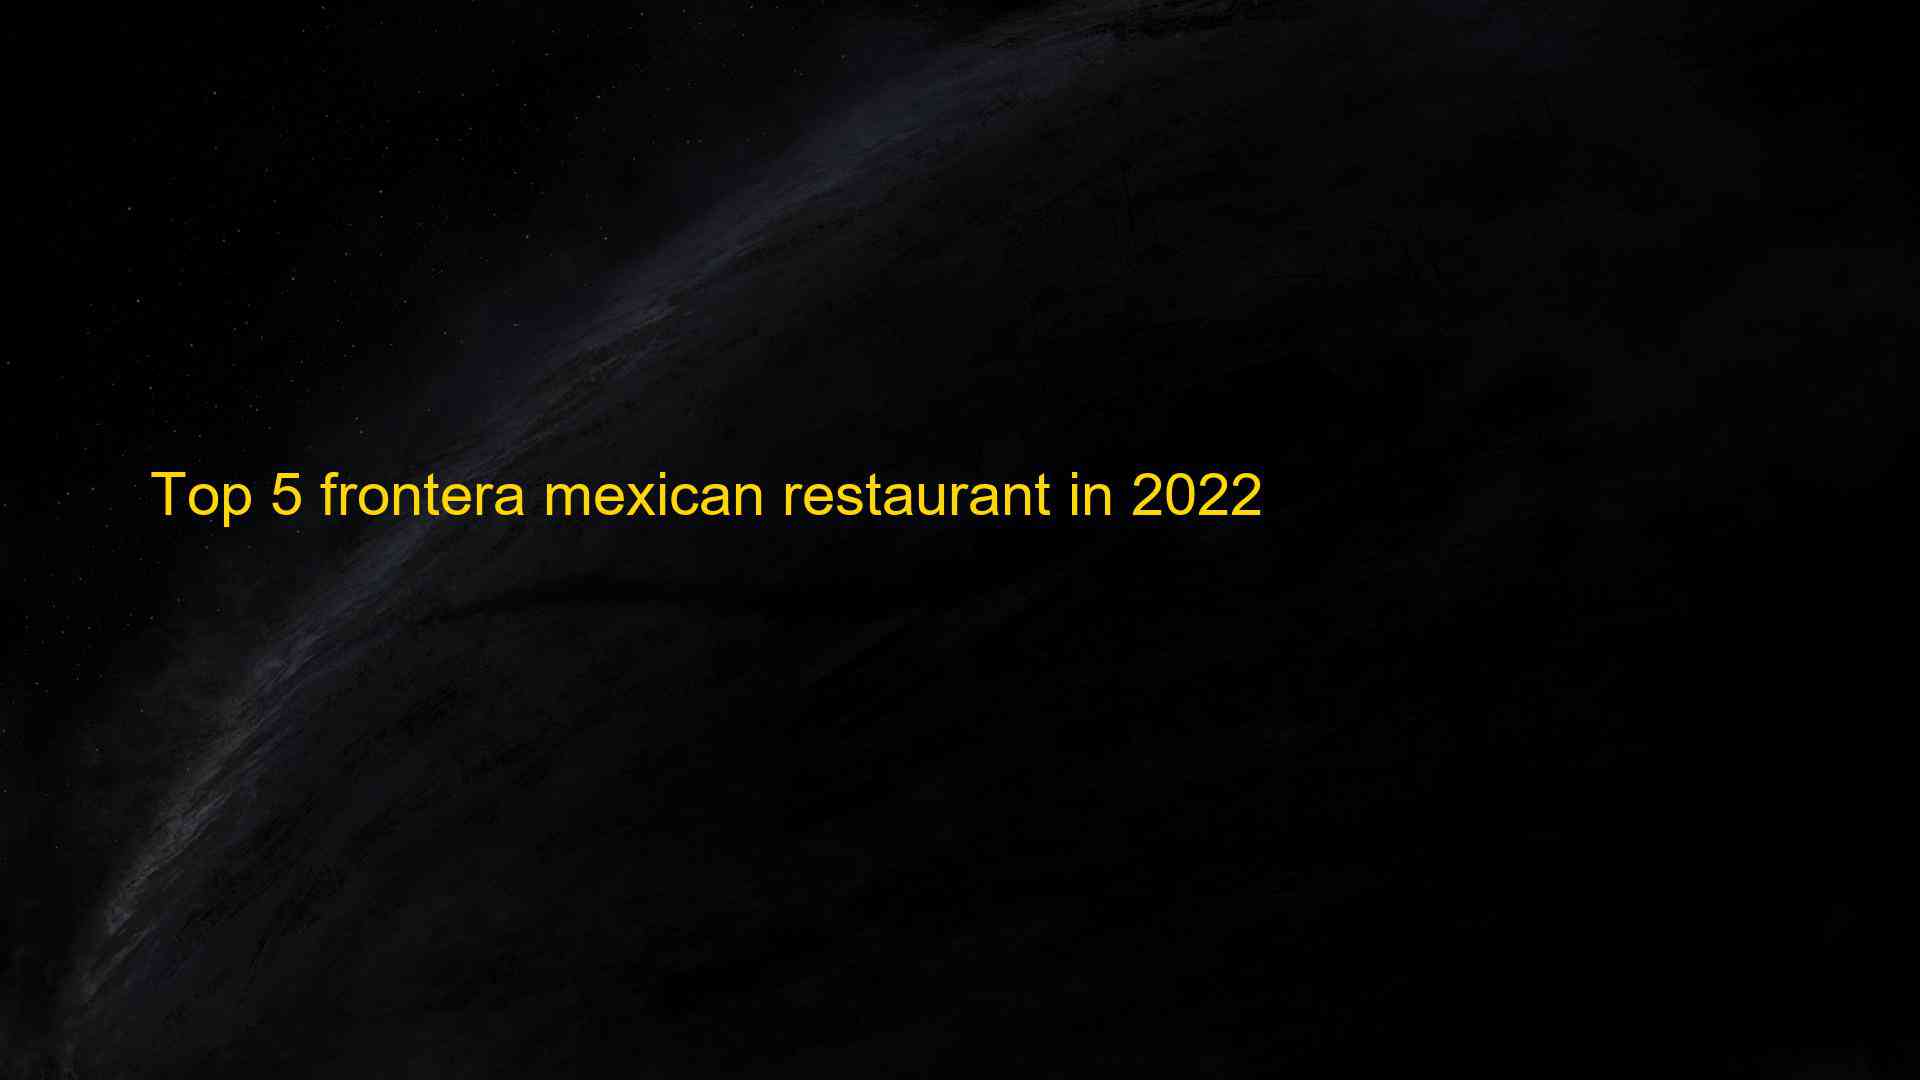 Top 5 frontera mexican restaurant in 2022 1663181238